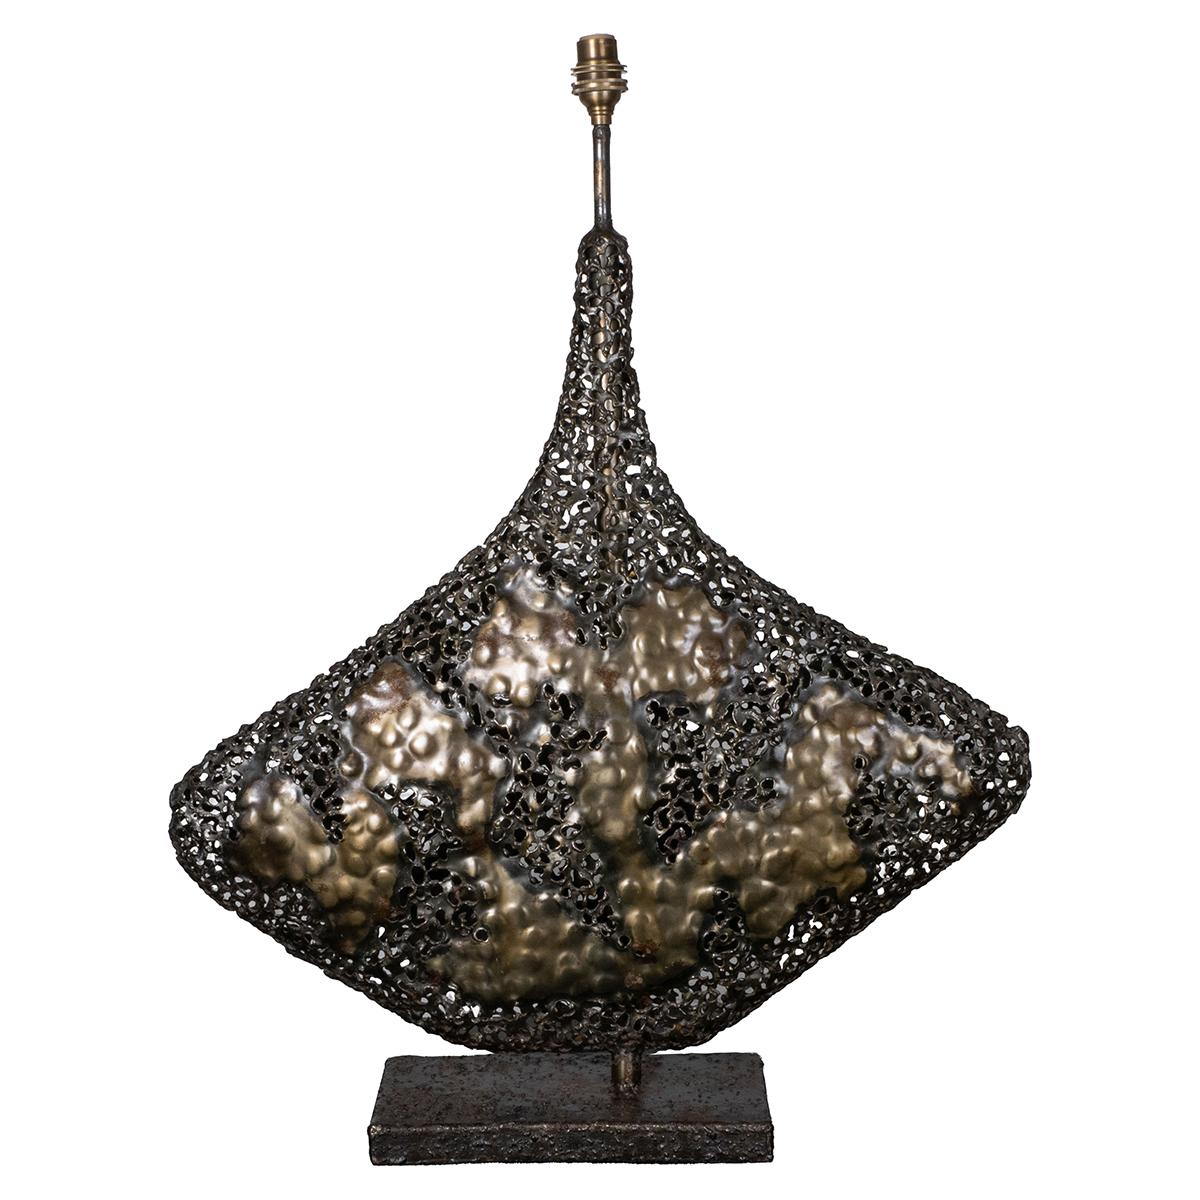 Rare single brutalist style pierced metal table lamp by Fantoni.